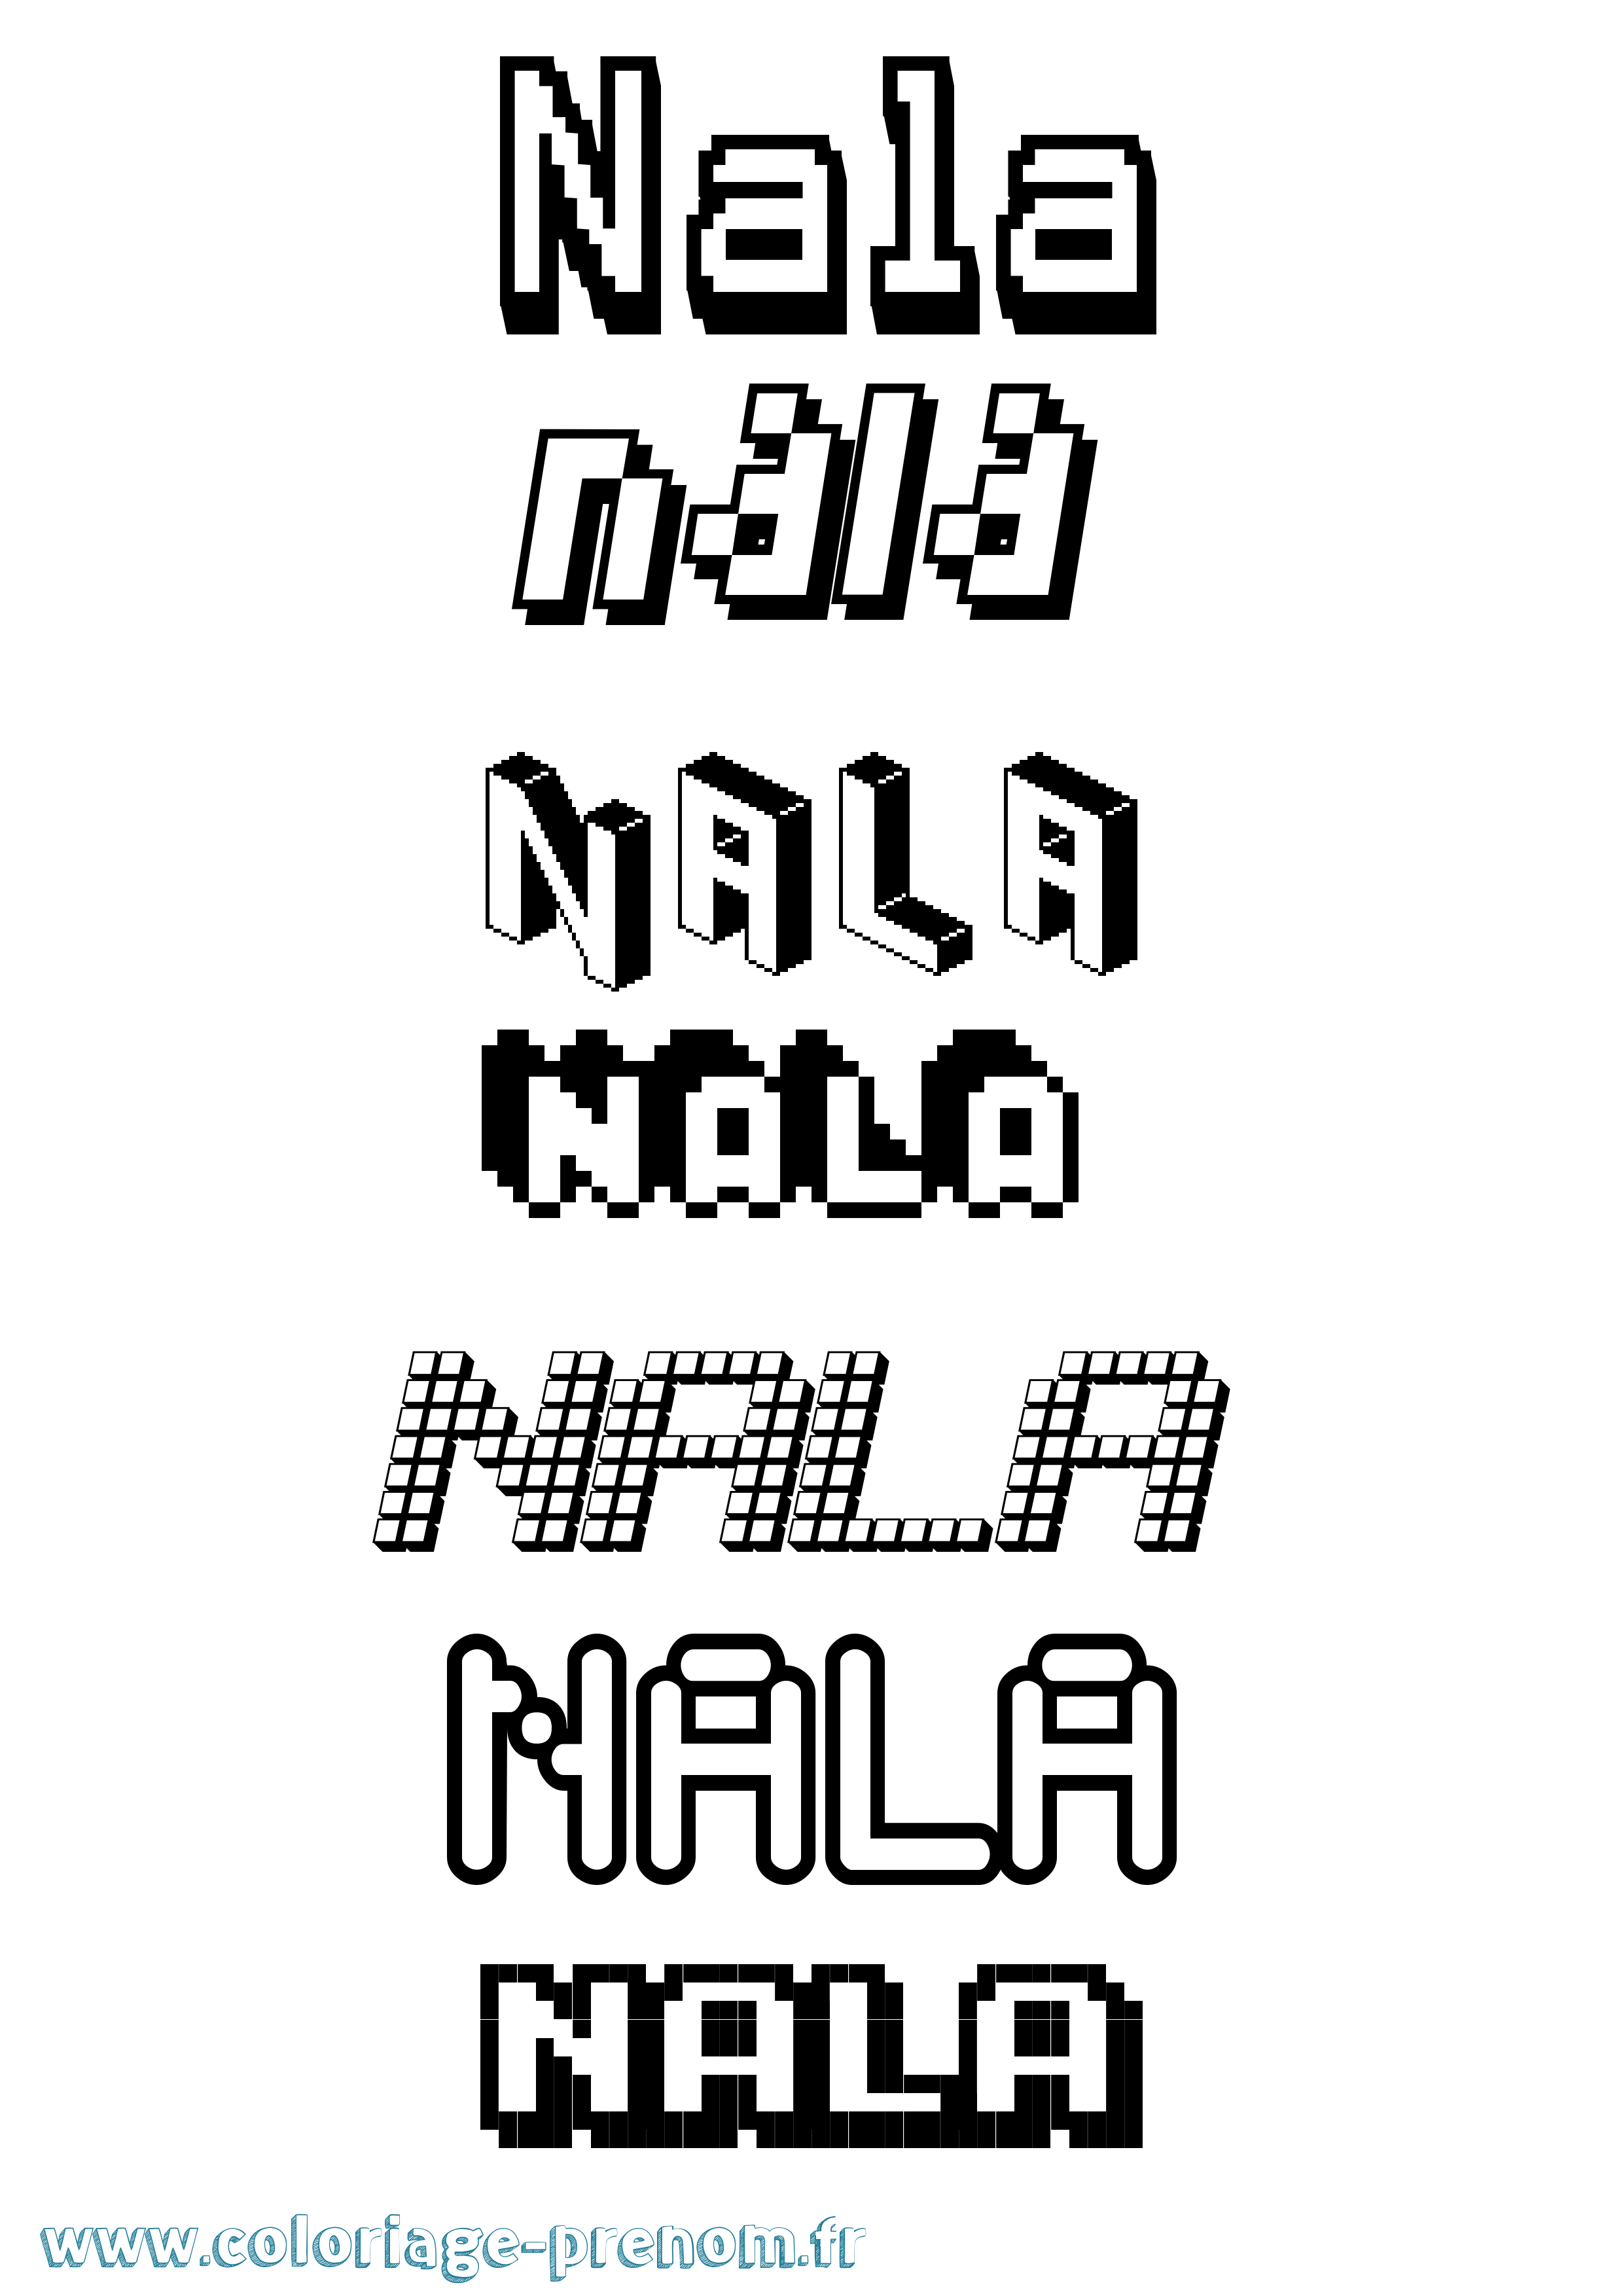 Coloriage prénom Nala Pixel